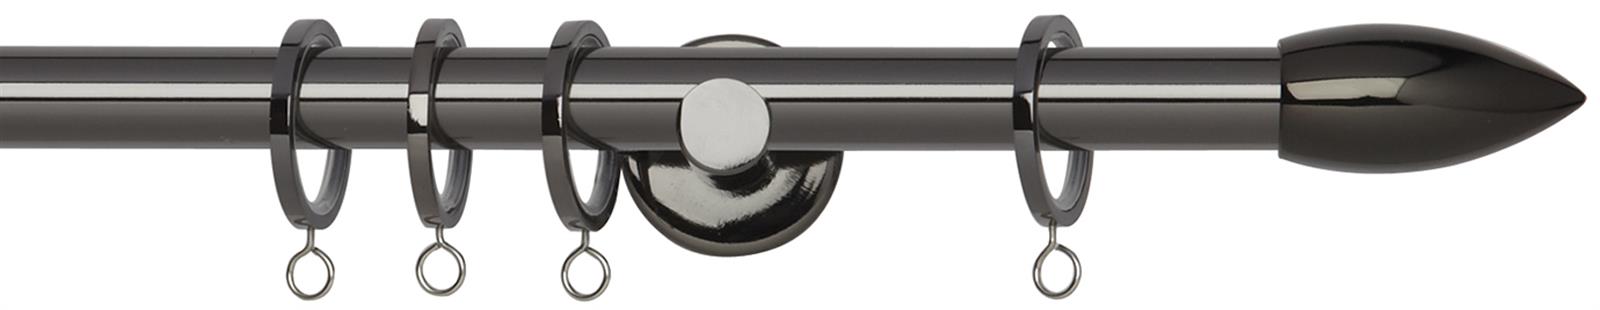 Neo 19mm Pole Black Nickel Bullet